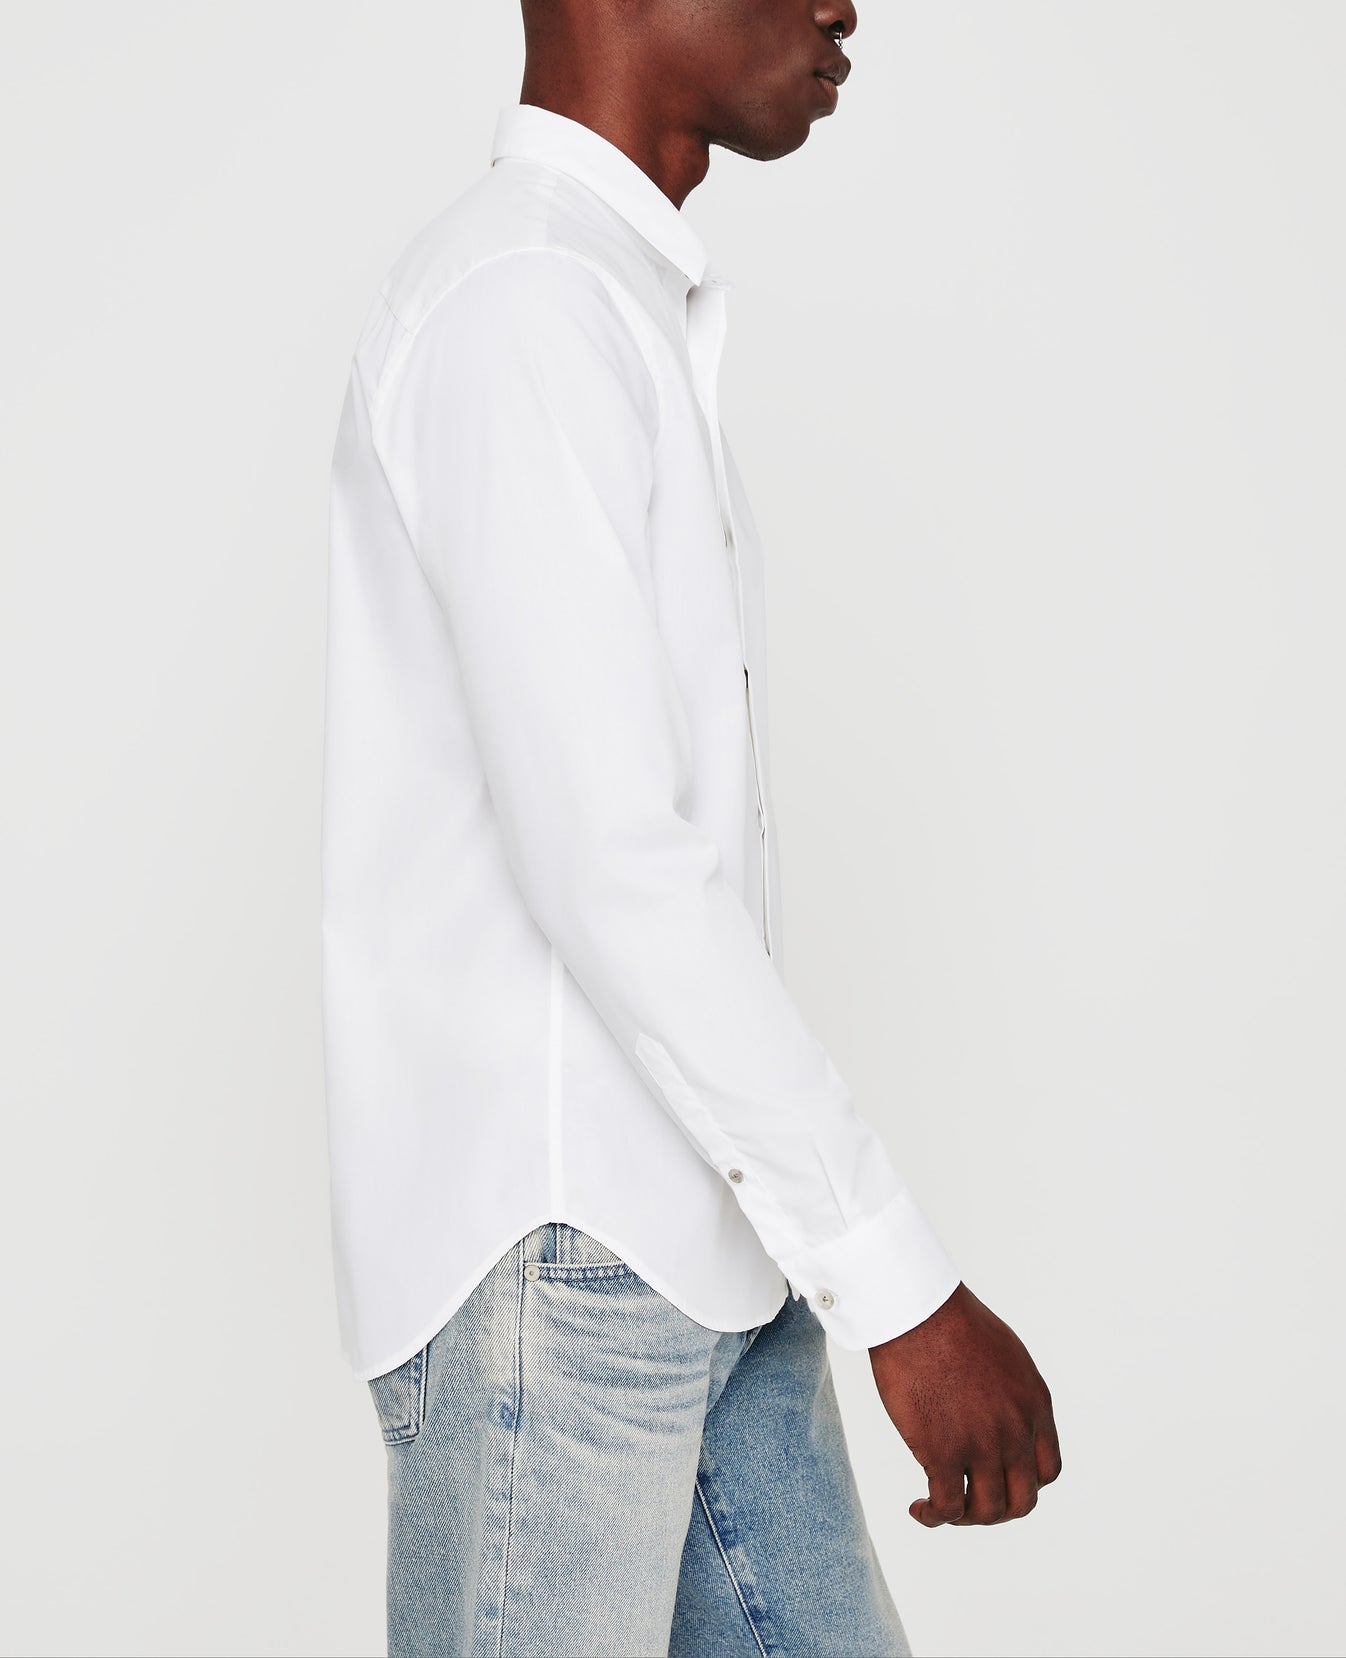 Ace Dress Shirt True White Long Sleeve Shirt Men Tops Photo 6